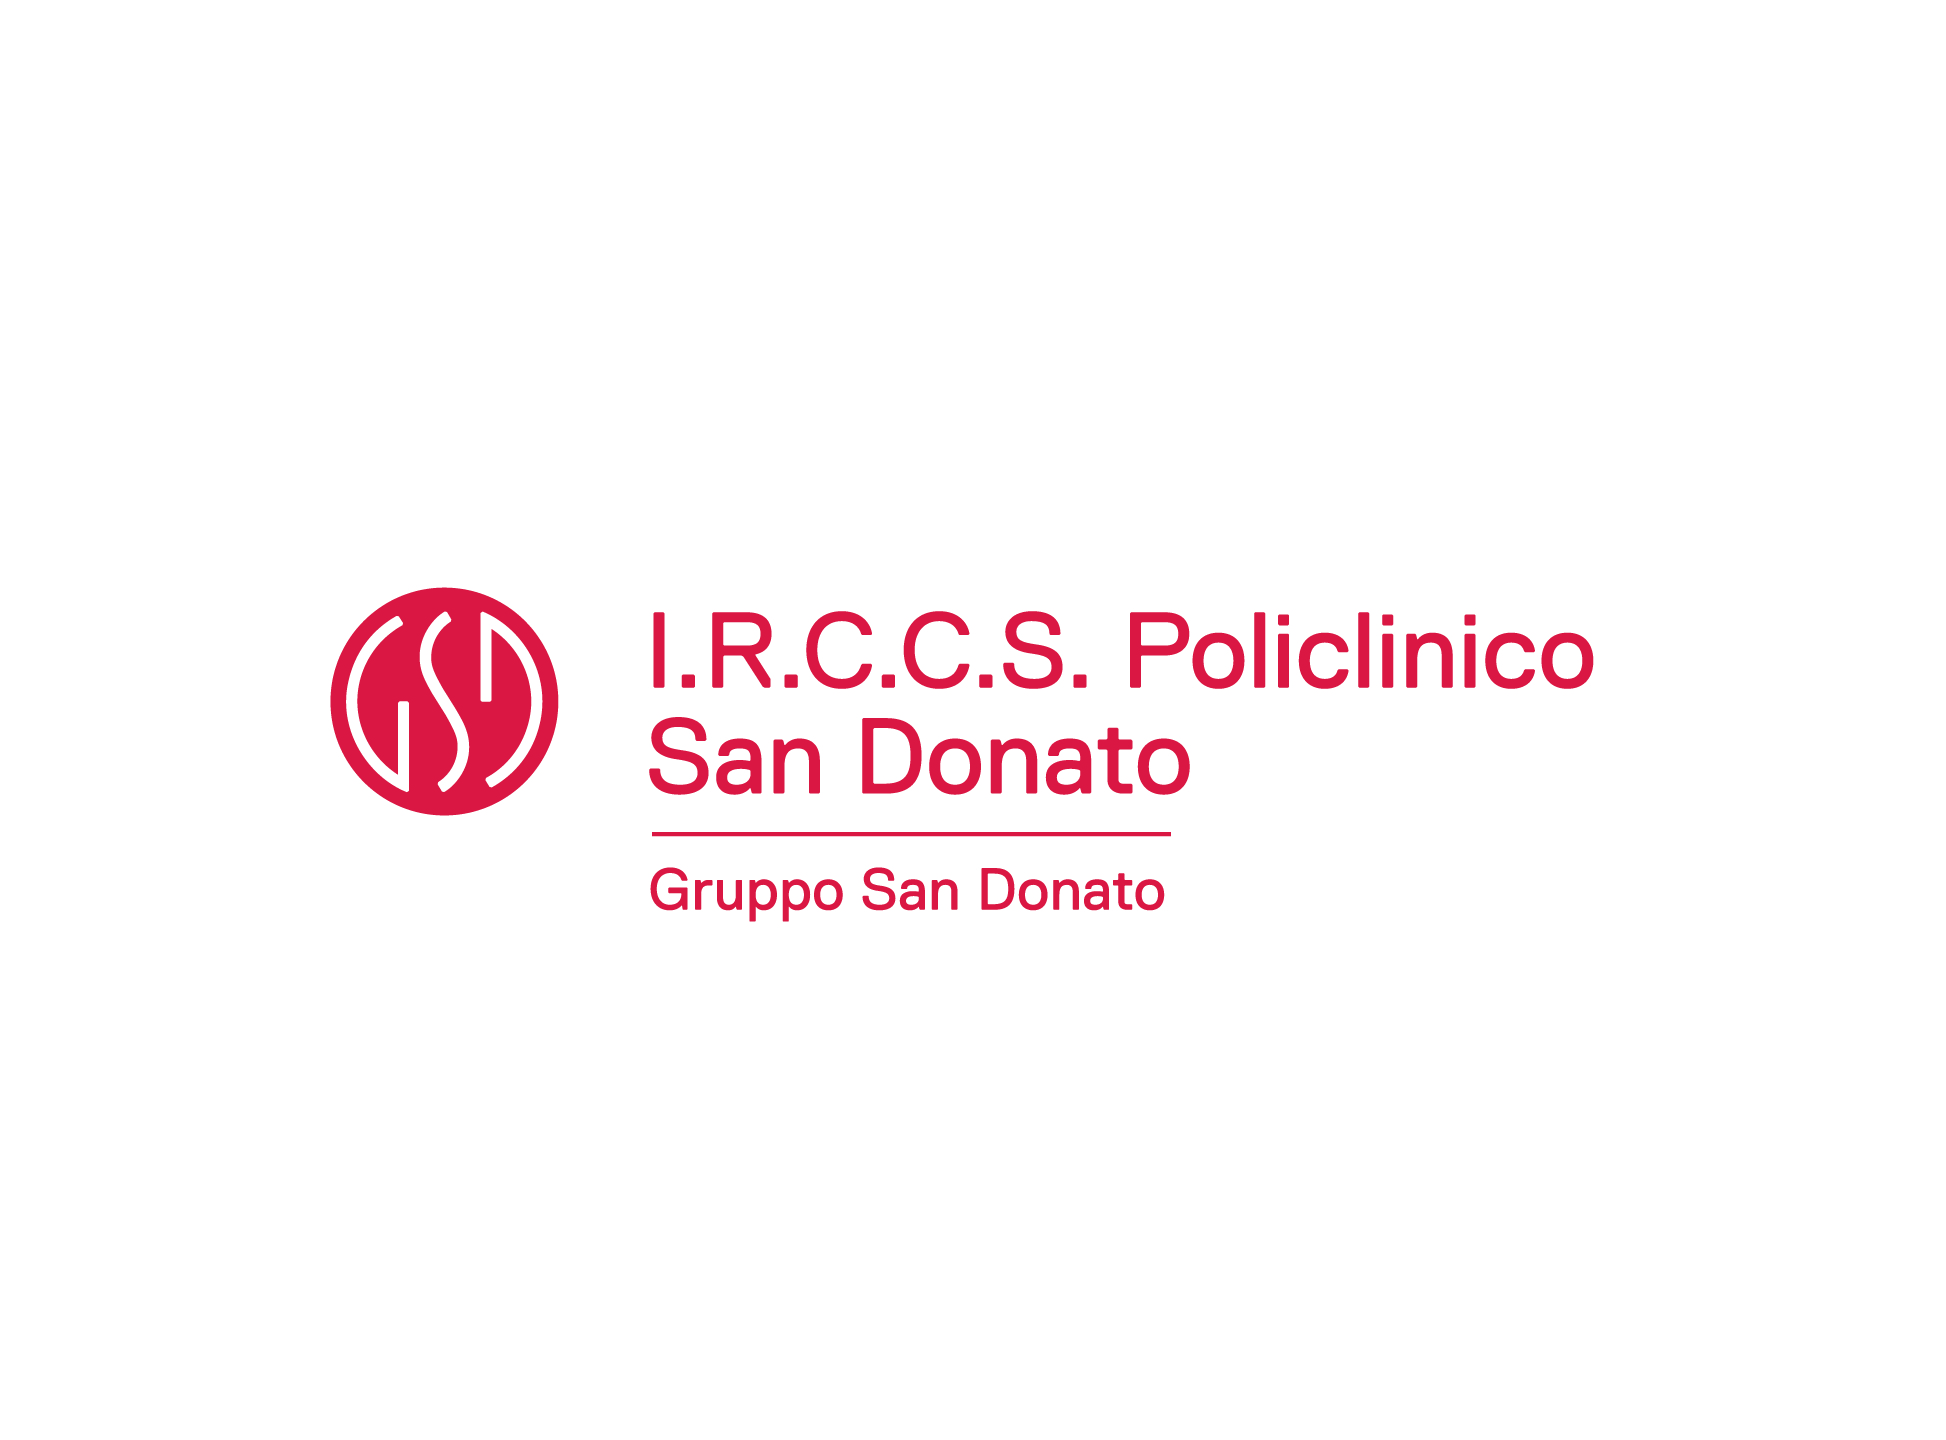 IRCCS Policlinico圣多纳托的标志